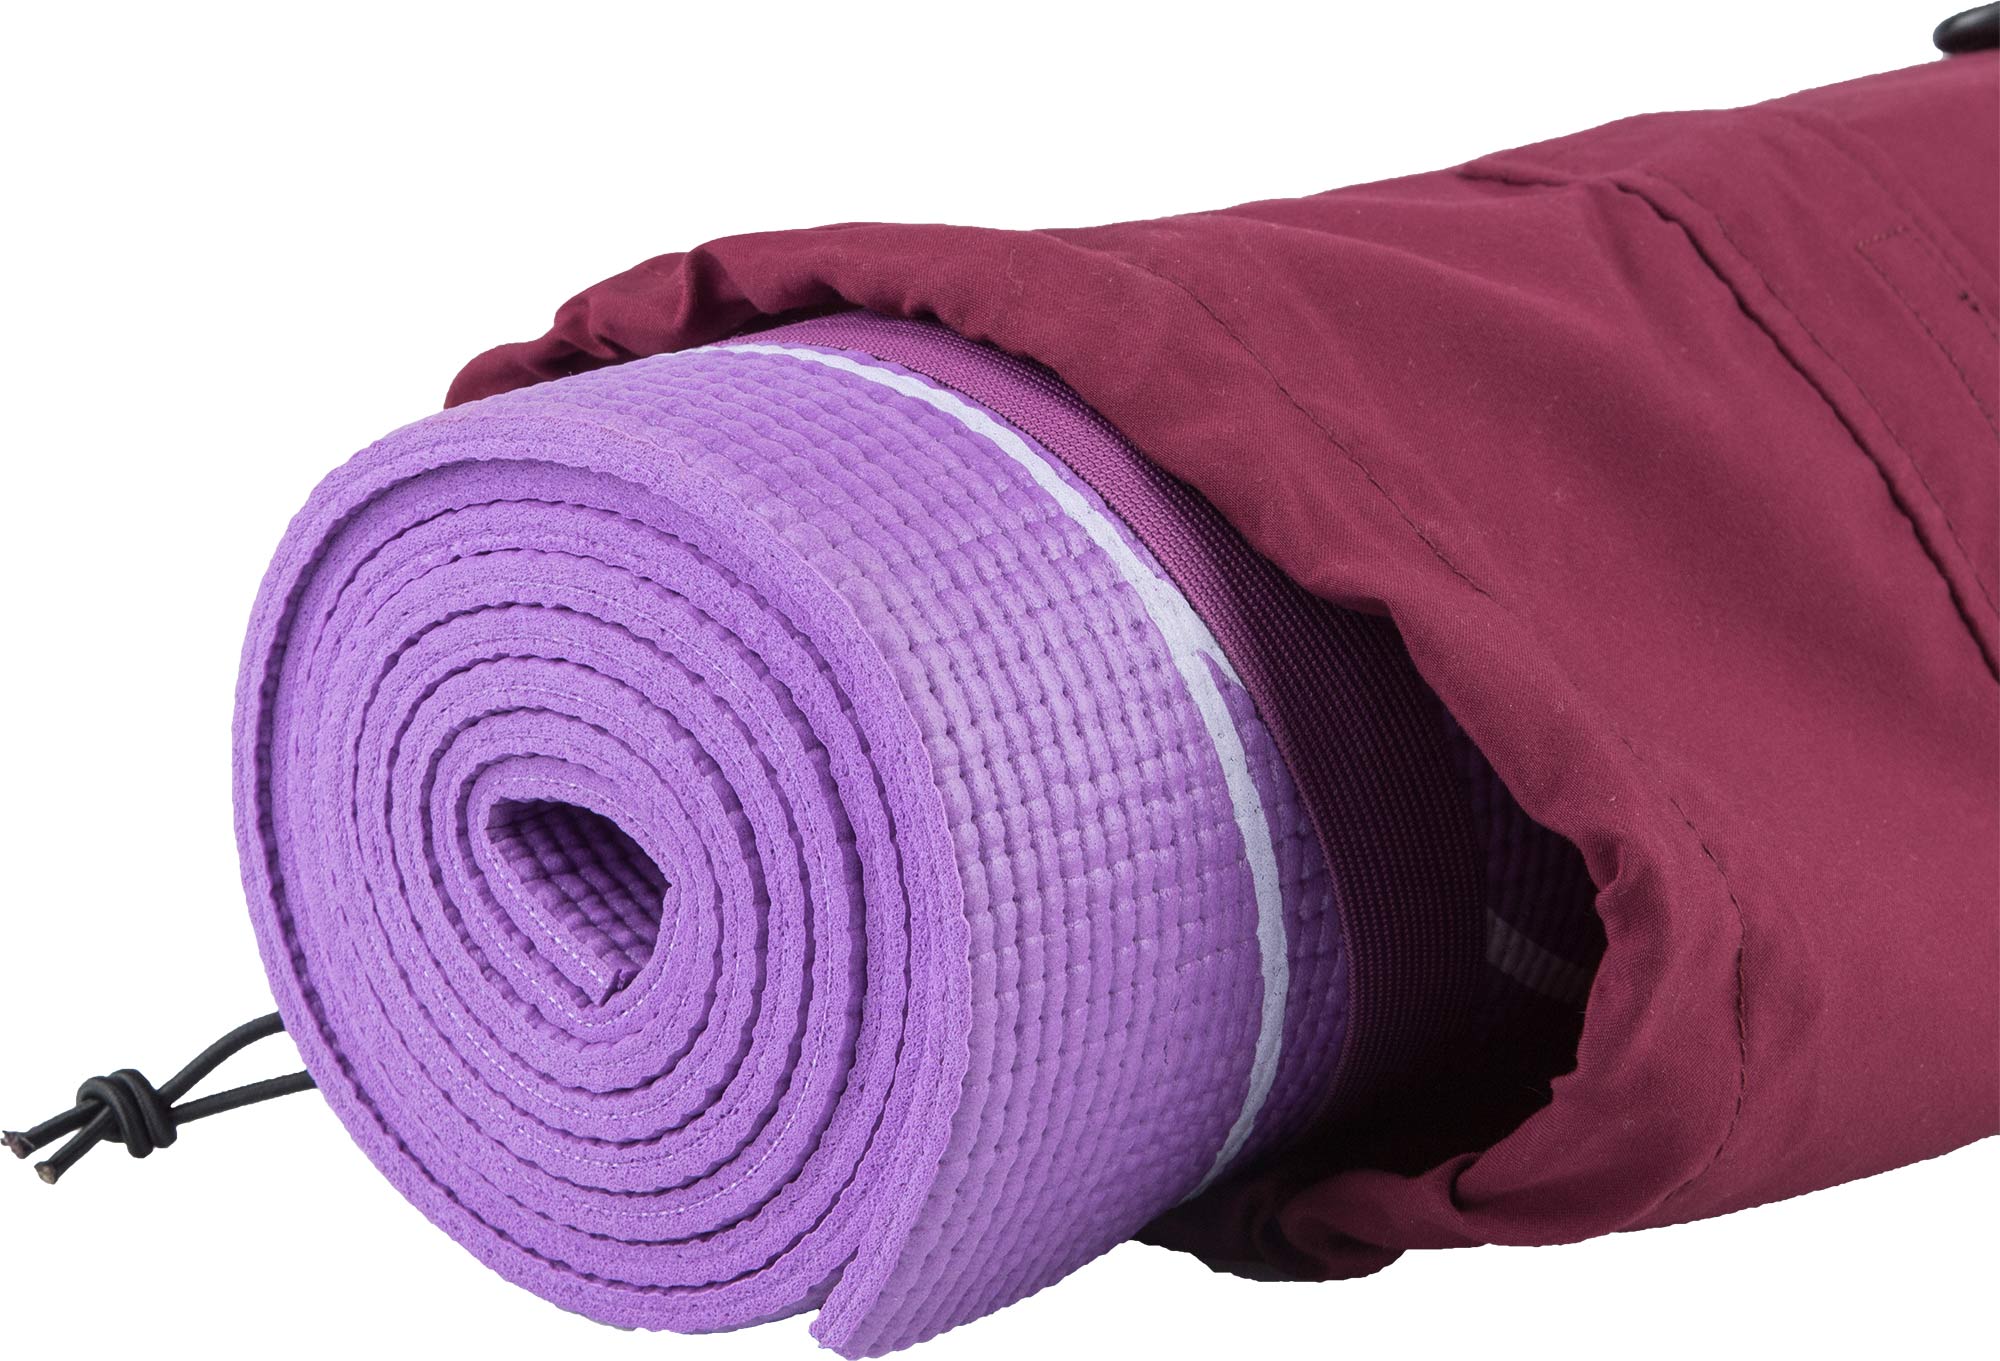 Yoga mat case